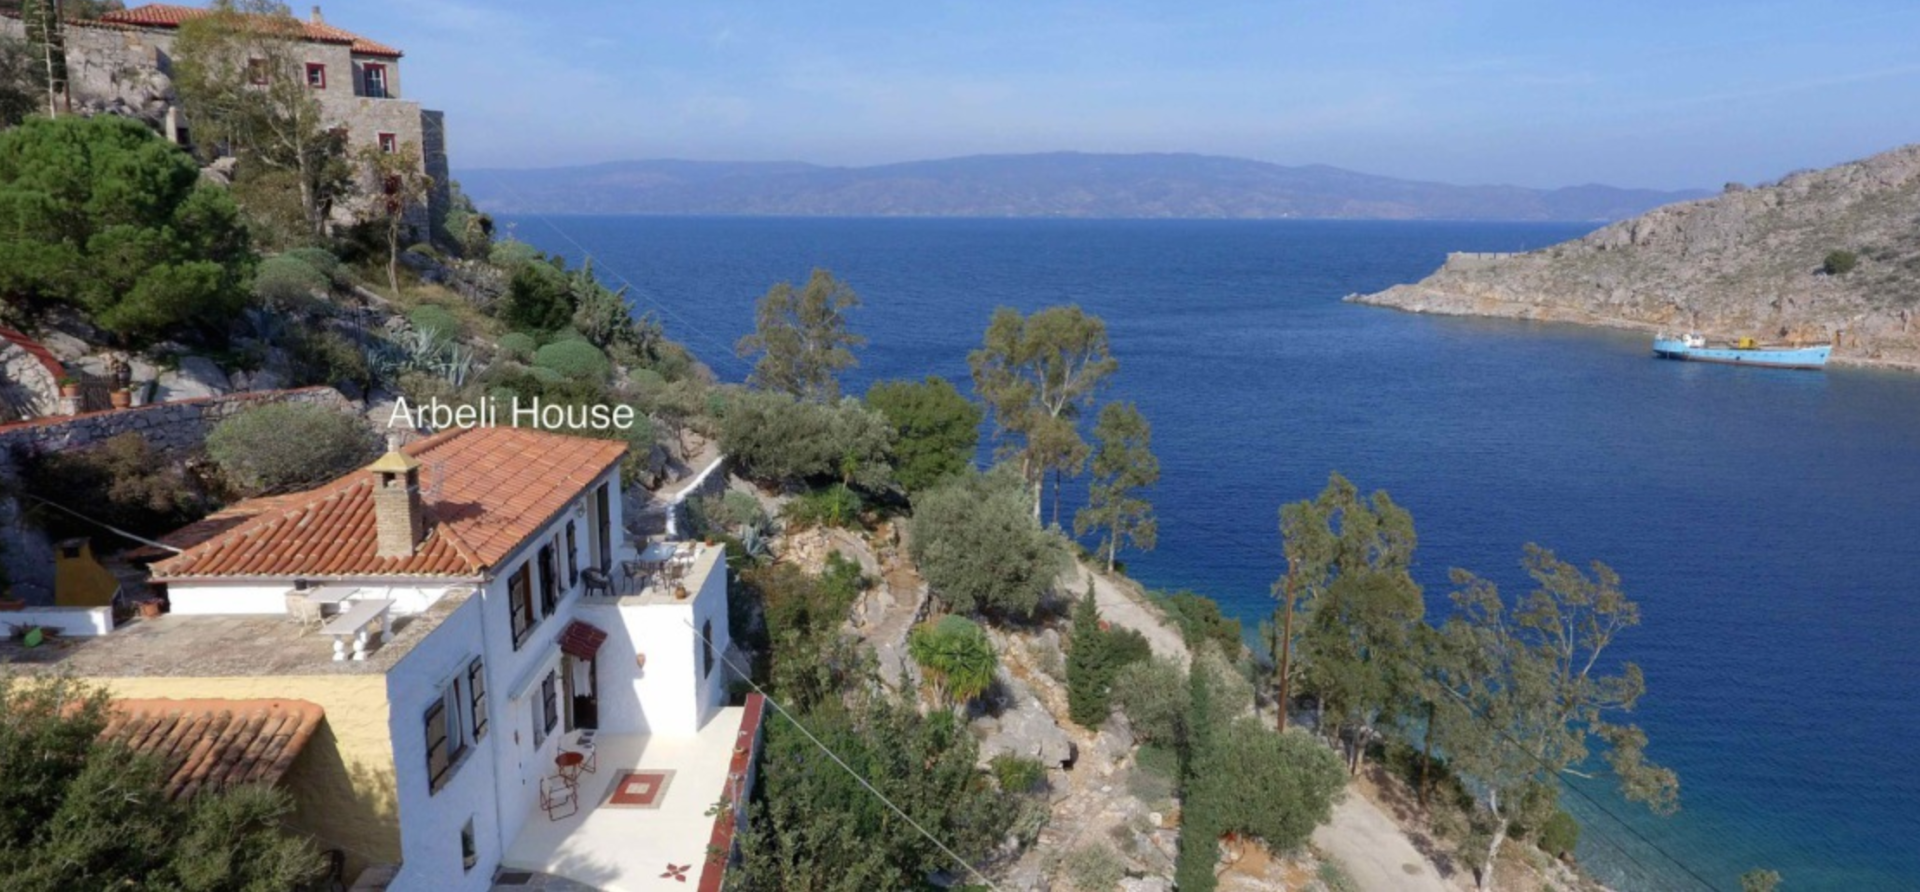 Arbeli House (Mandraki Bay) - Private Holiday Houses on Hydra - Accommodation on Hydra Island Greece.